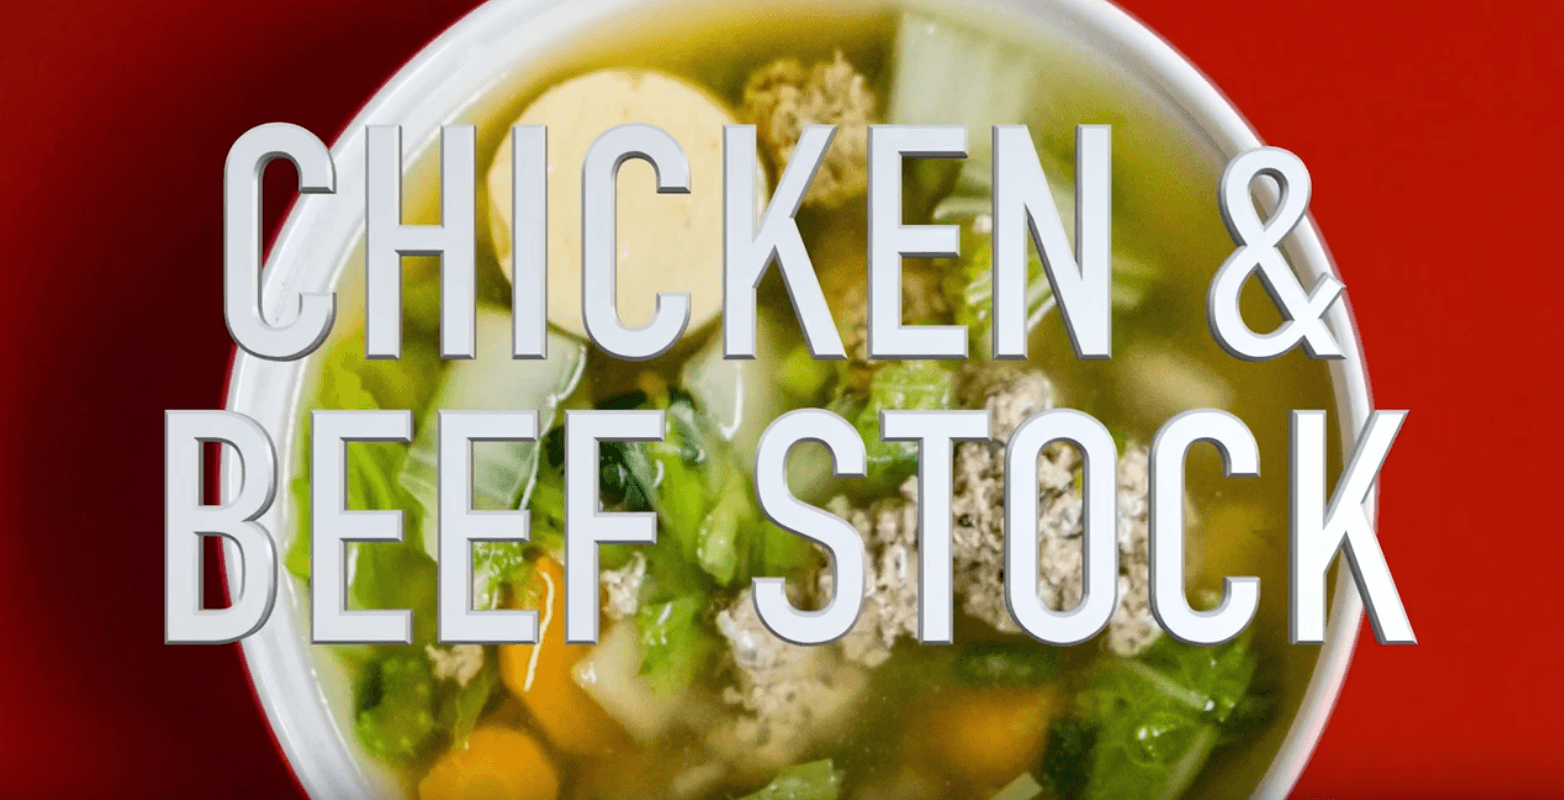 Easy Vegan Hack 14 for Veganuary - Chicken & Beef Stock Substitute